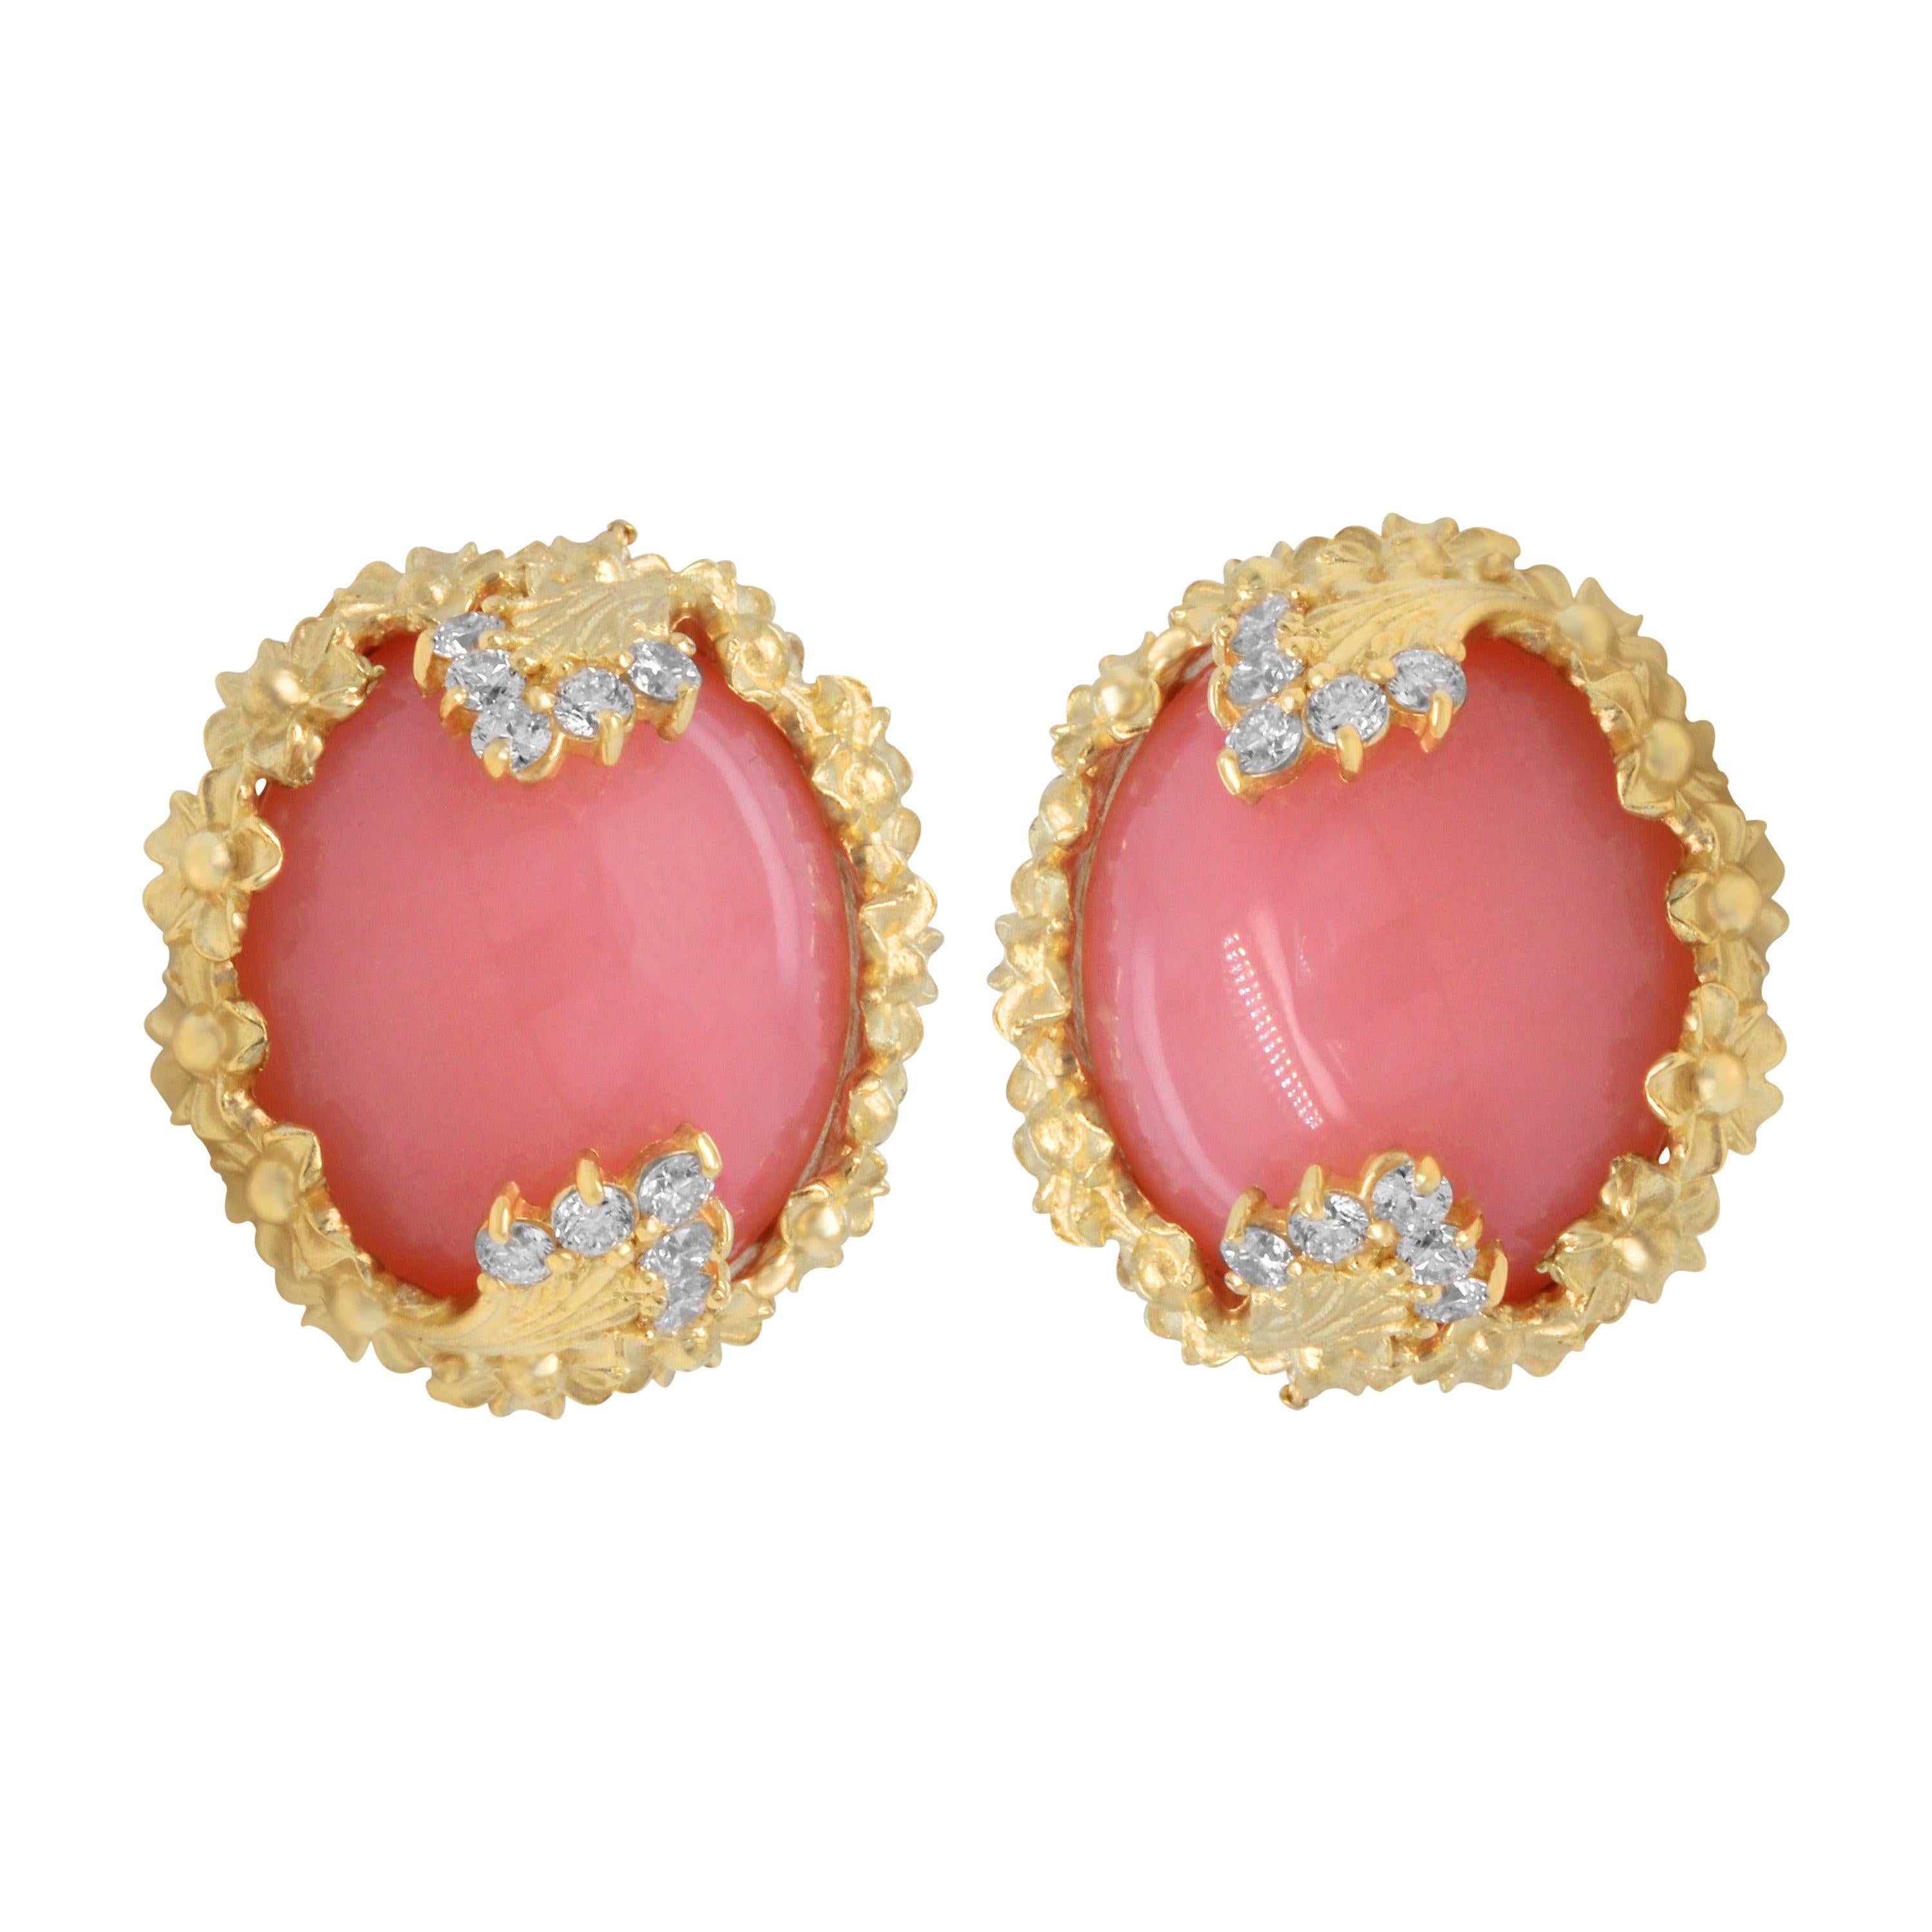 Stambolian 18K Yellow Gold Diamond Peruvian Pink Opal Floral Button Earrings